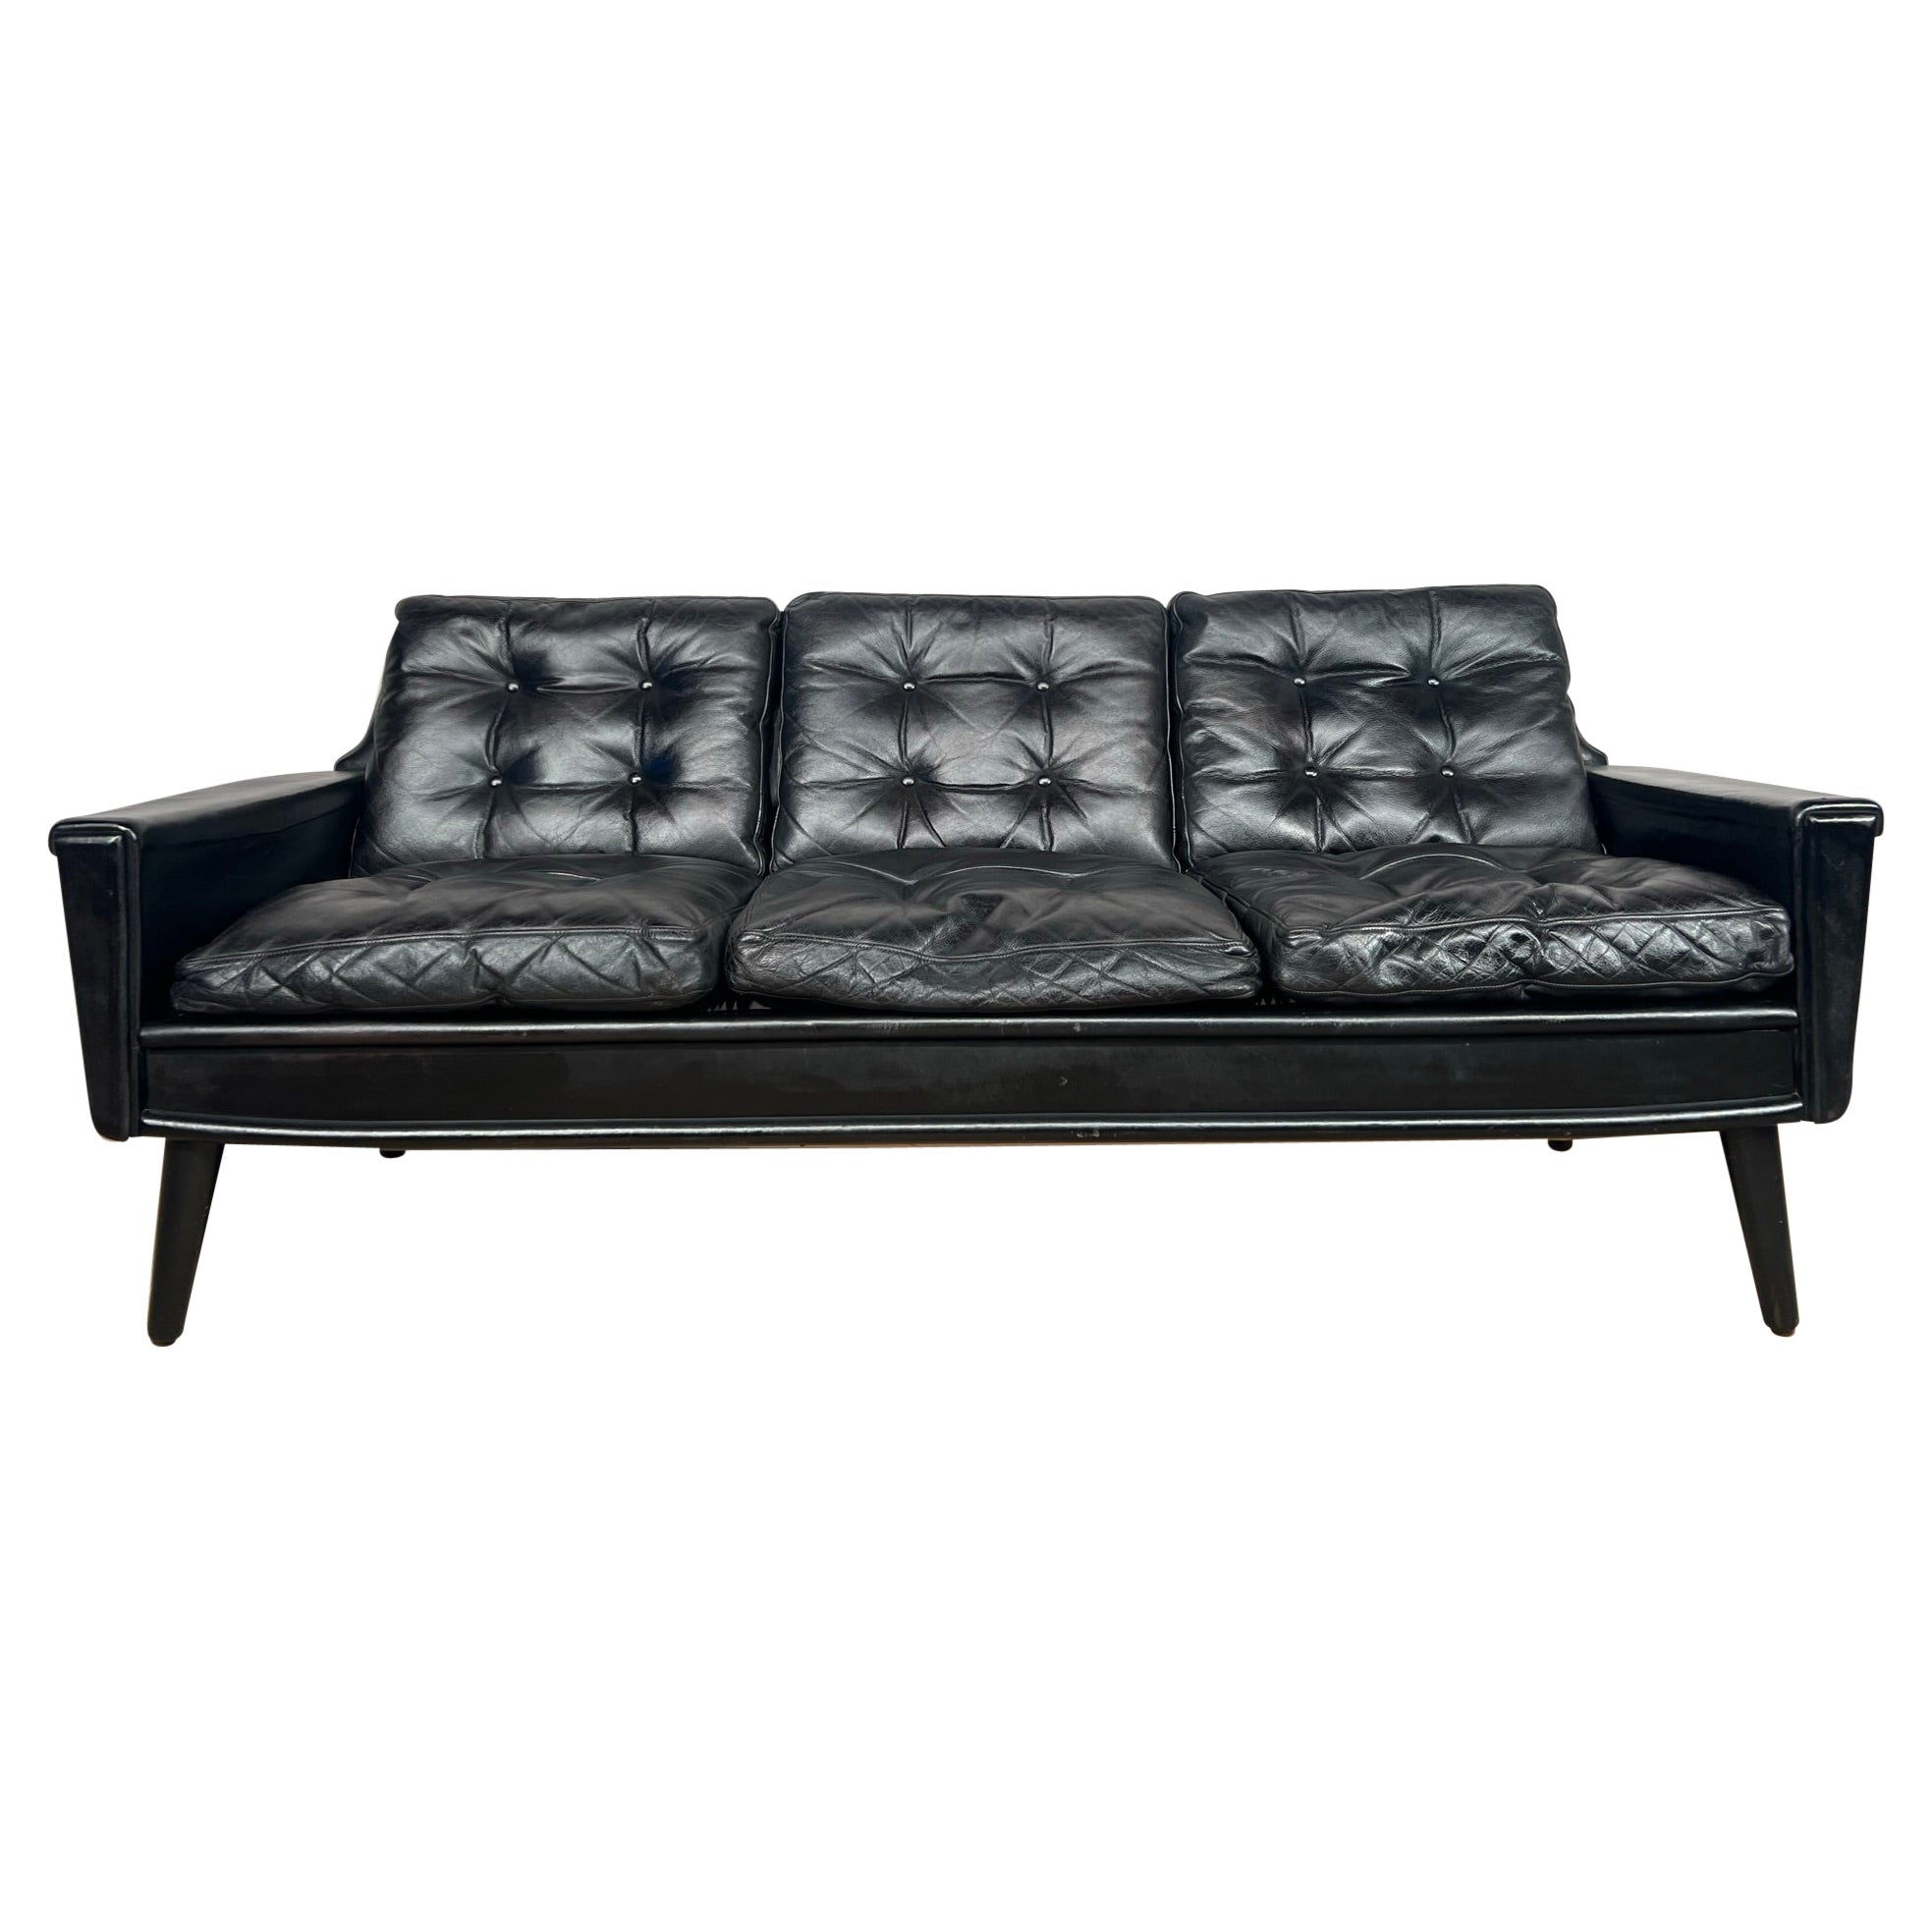 Stylish Vintage Danish Black Leather Three Seater Sofa For Sale